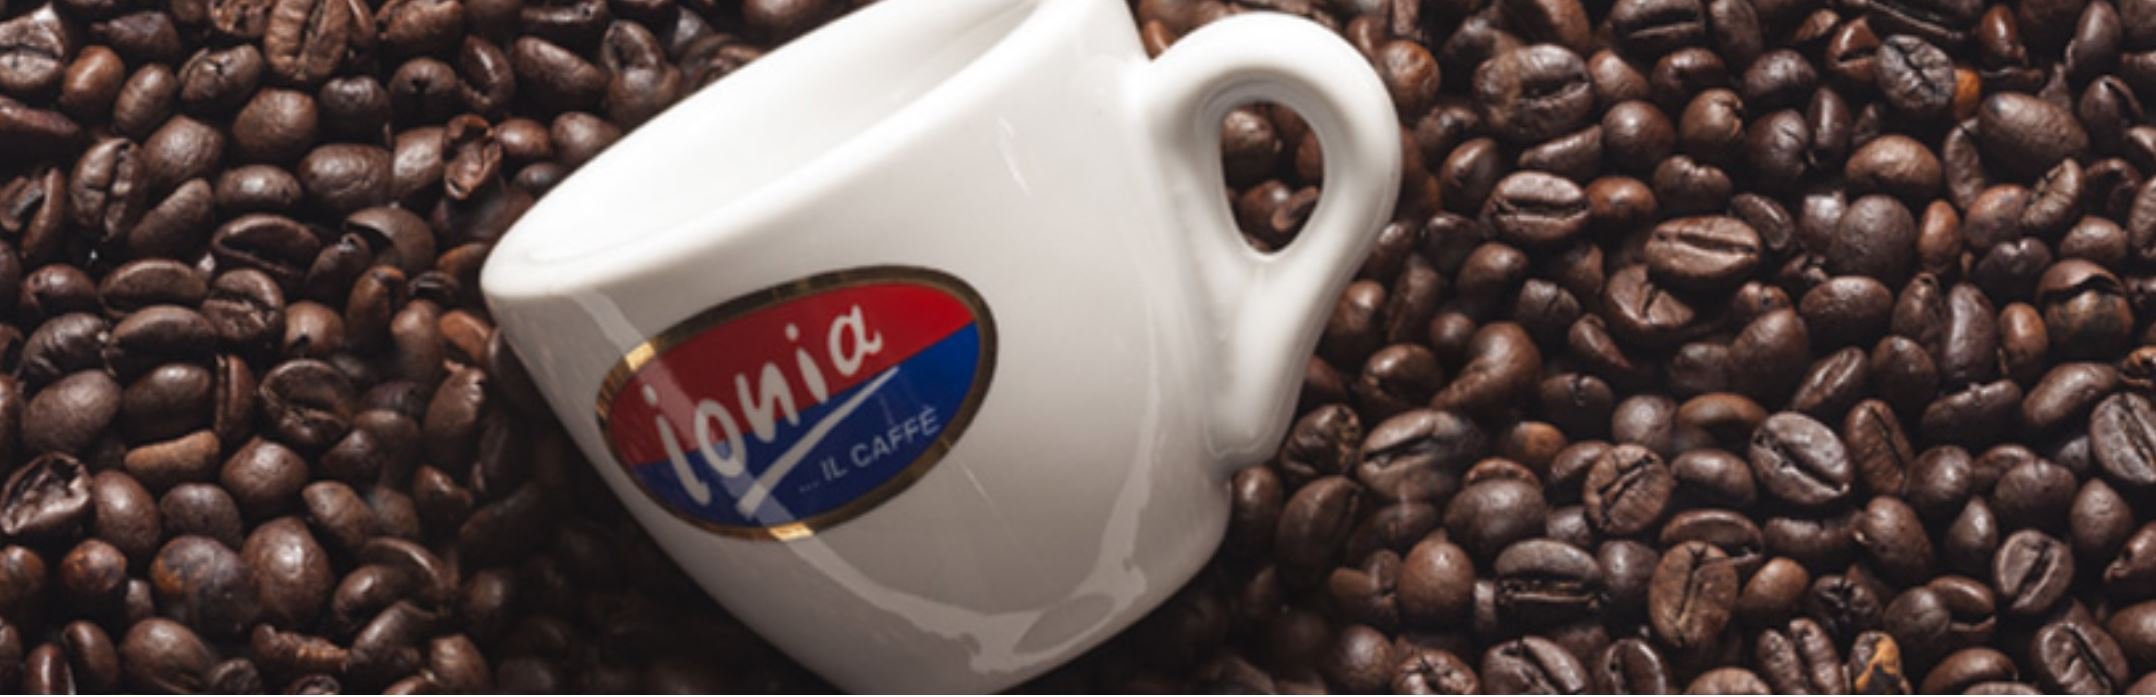 Ionia-Espressotasse-in-KaffeebohnensWWO6GanRl3ce